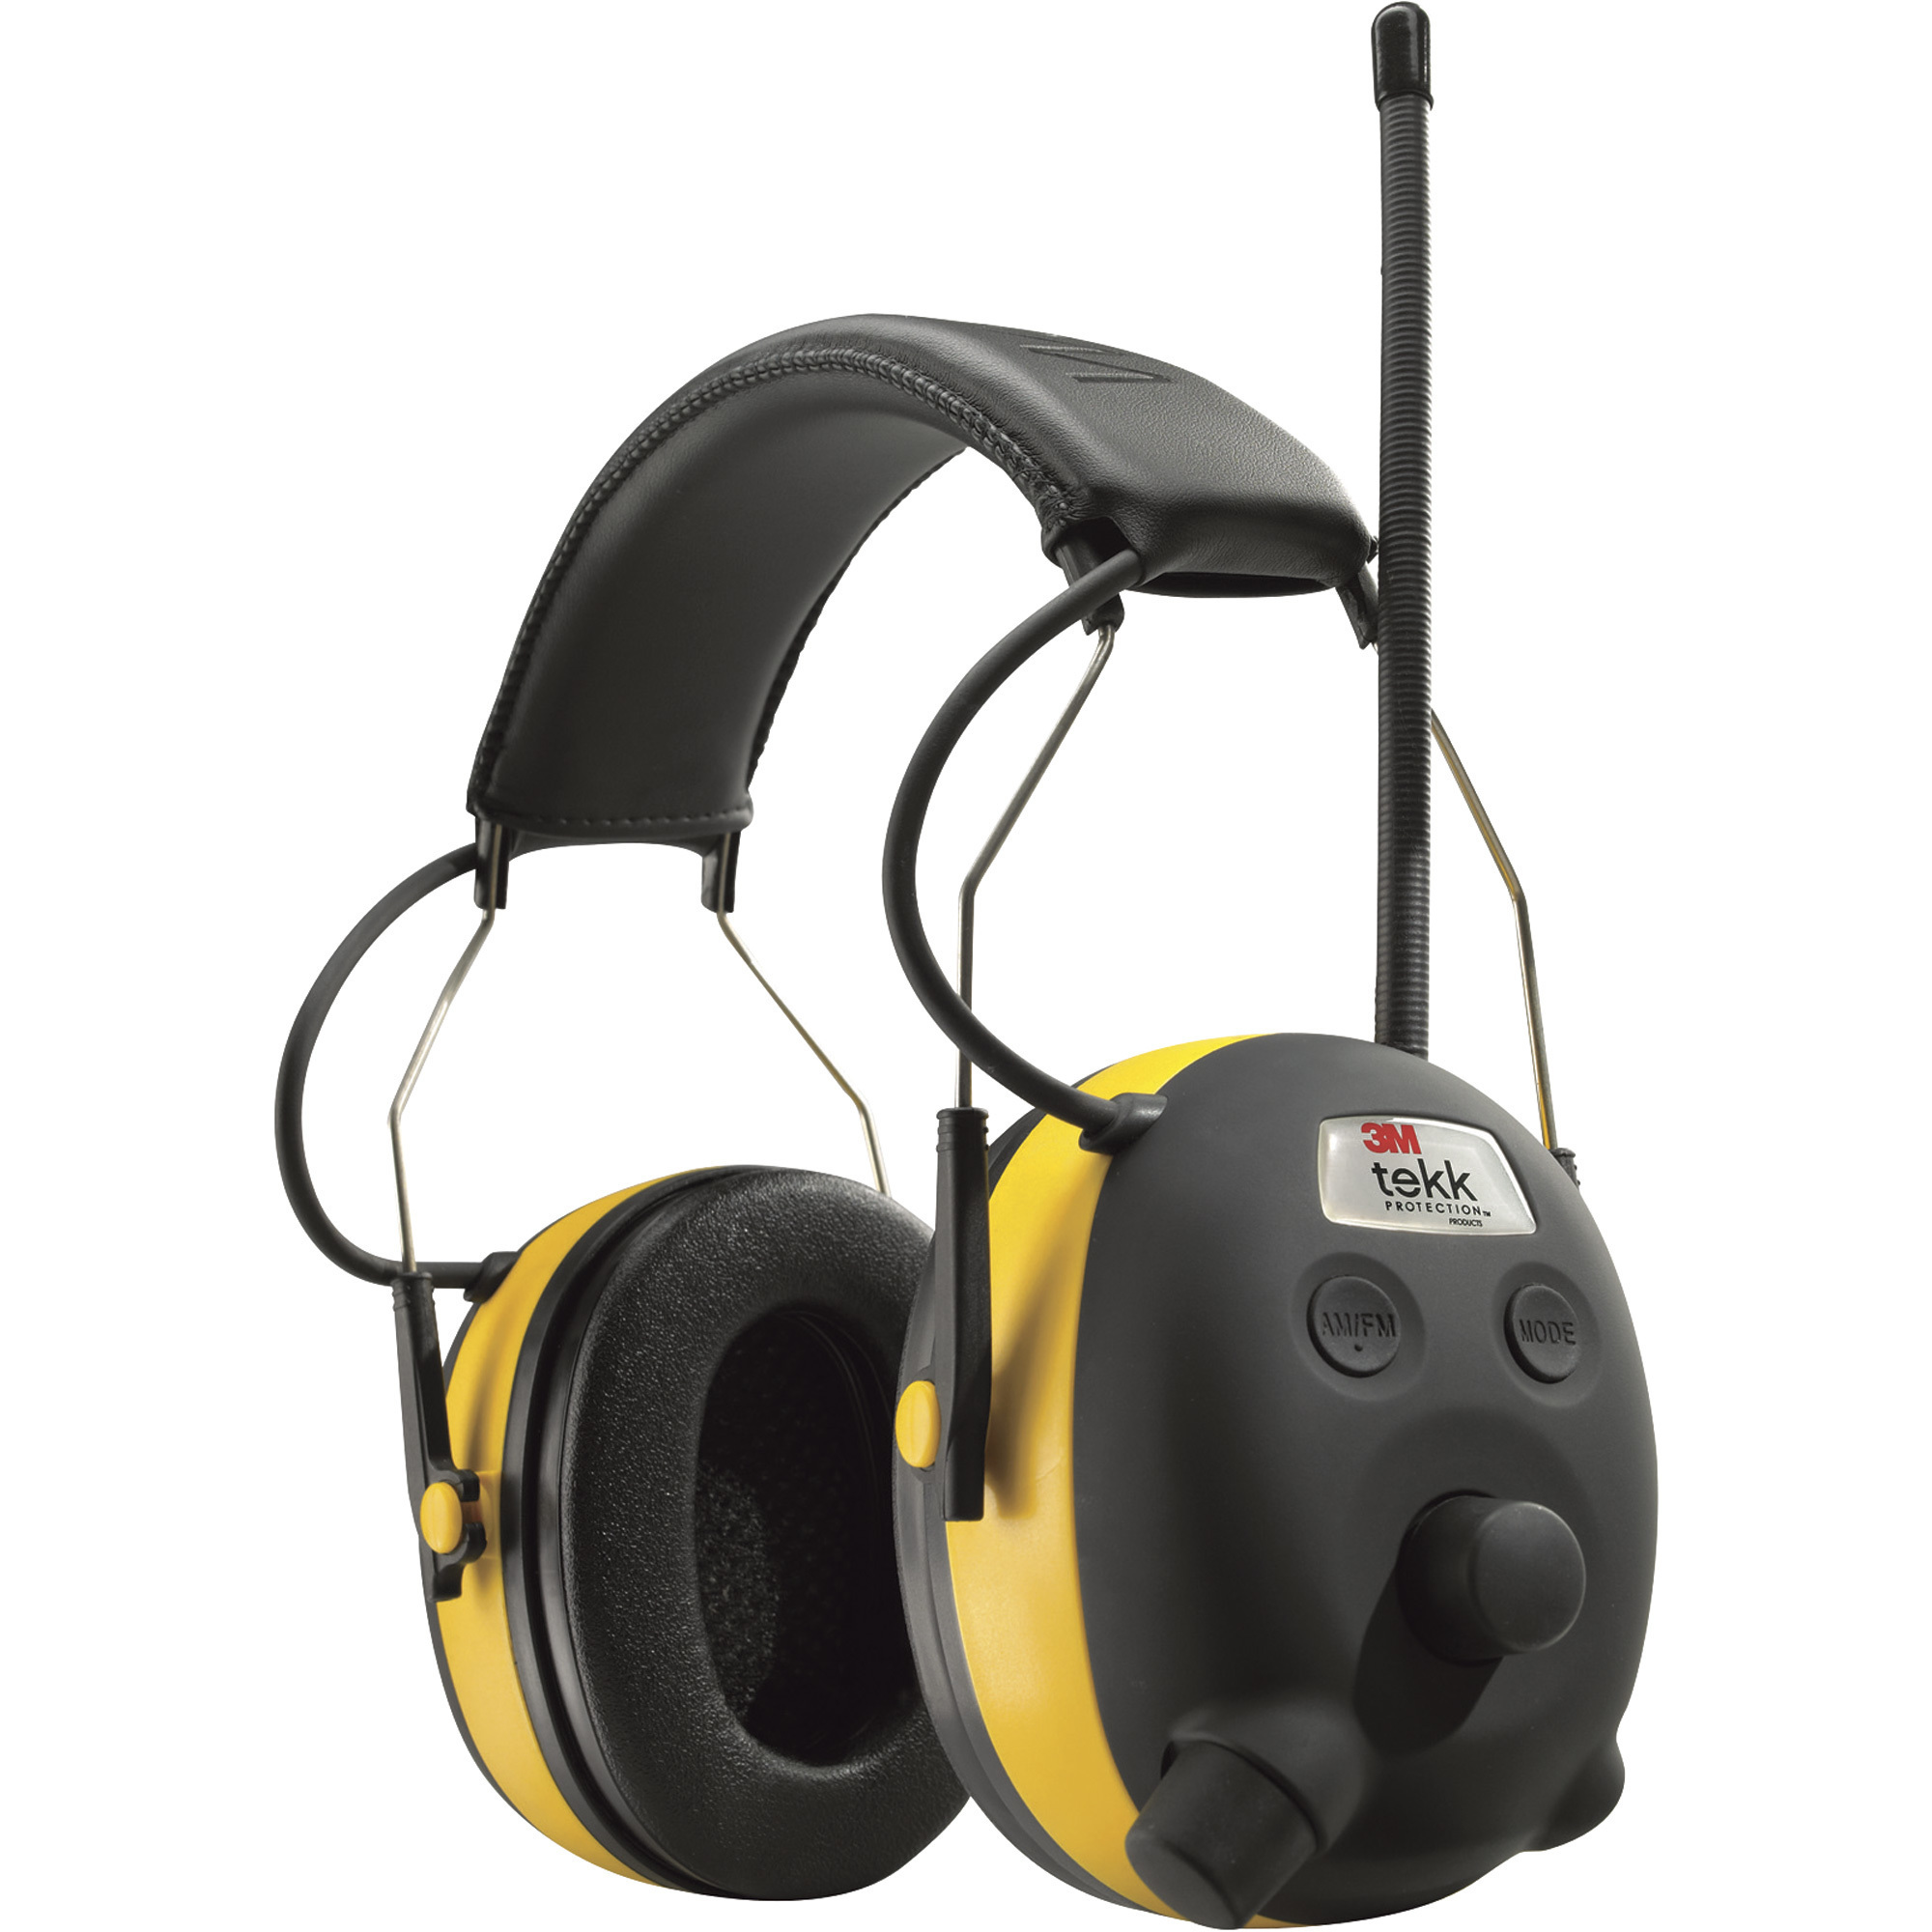 Work Tunes Hearing Protector Earmuff, Bluetooth Connect, 24dB